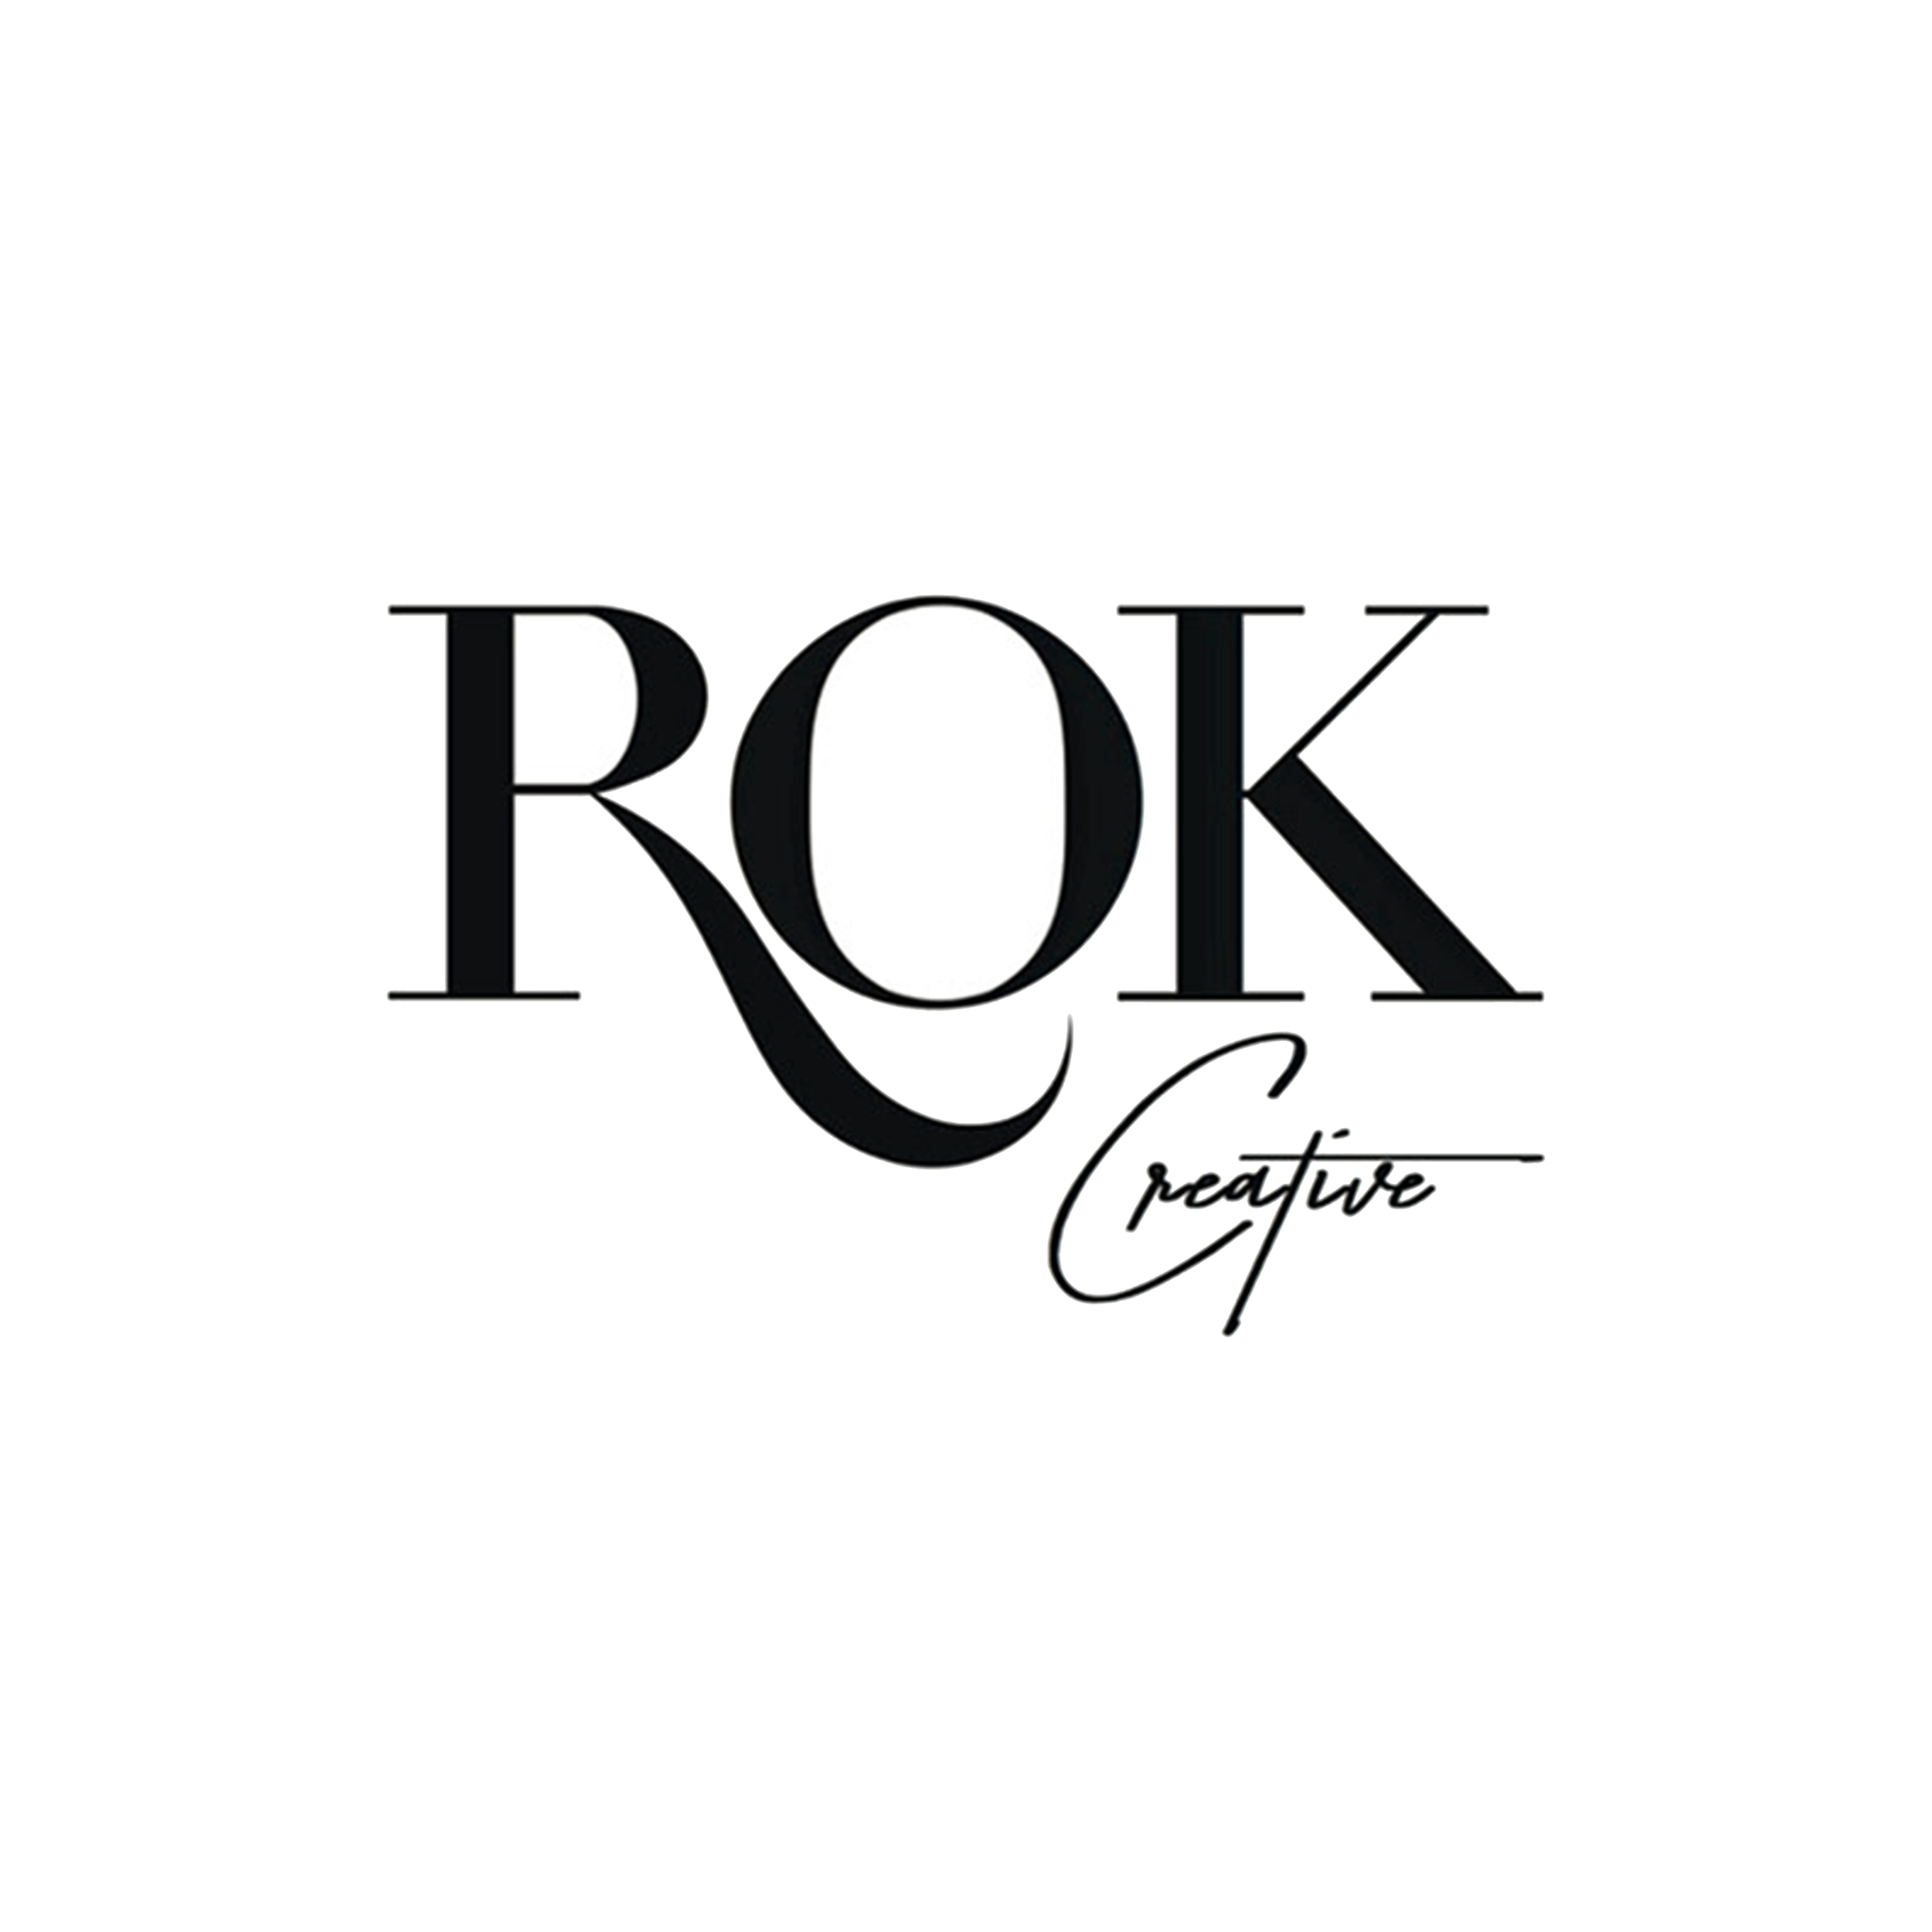 ROK Creative logo.png